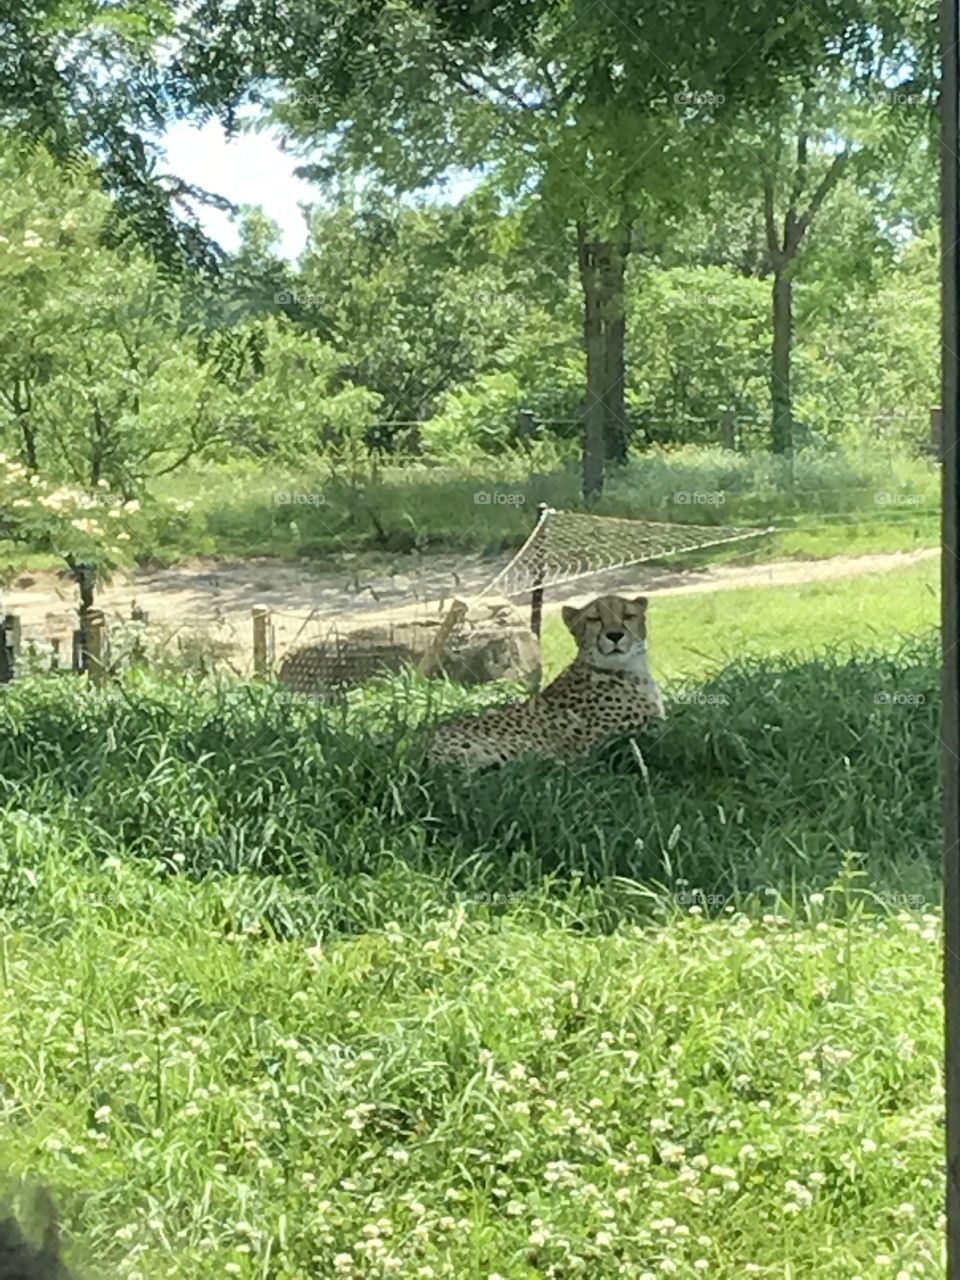 Cheetah 